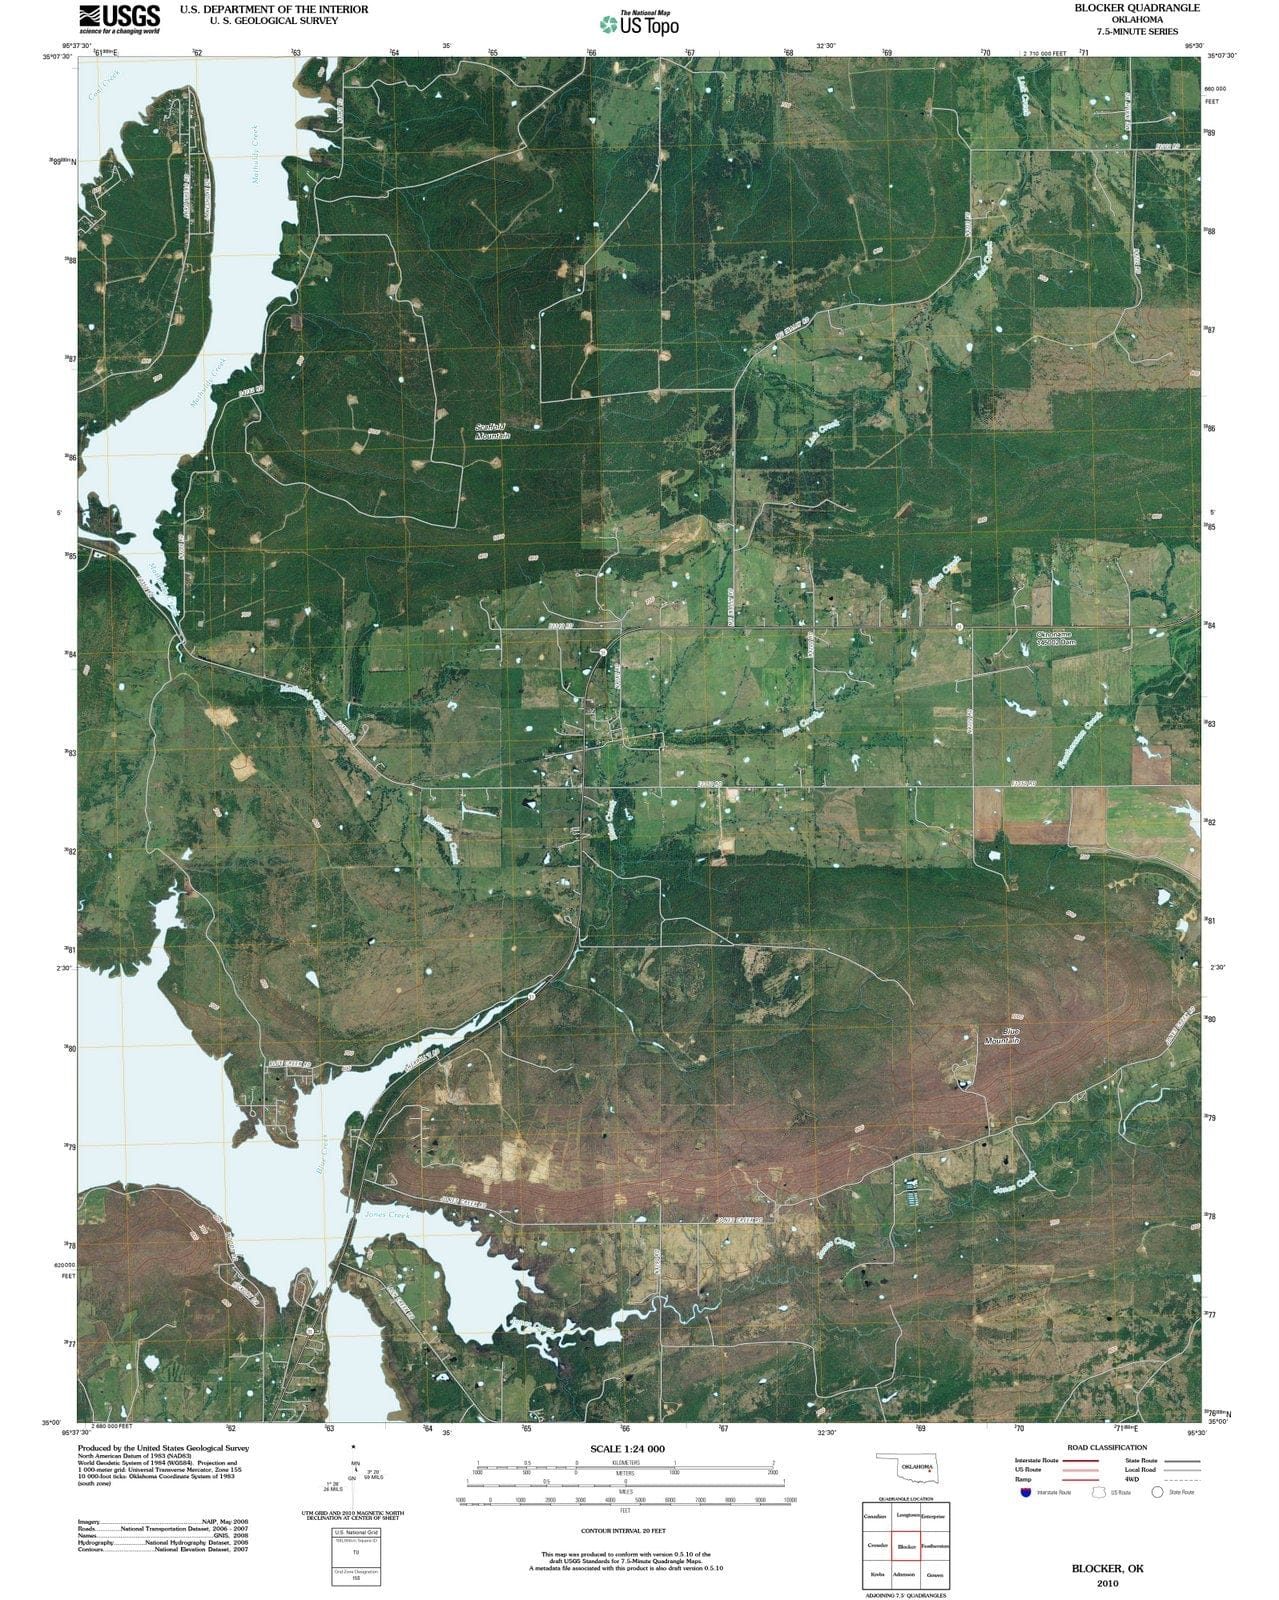 2010 Blocker, OK - Oklahoma - USGS Topographic Map